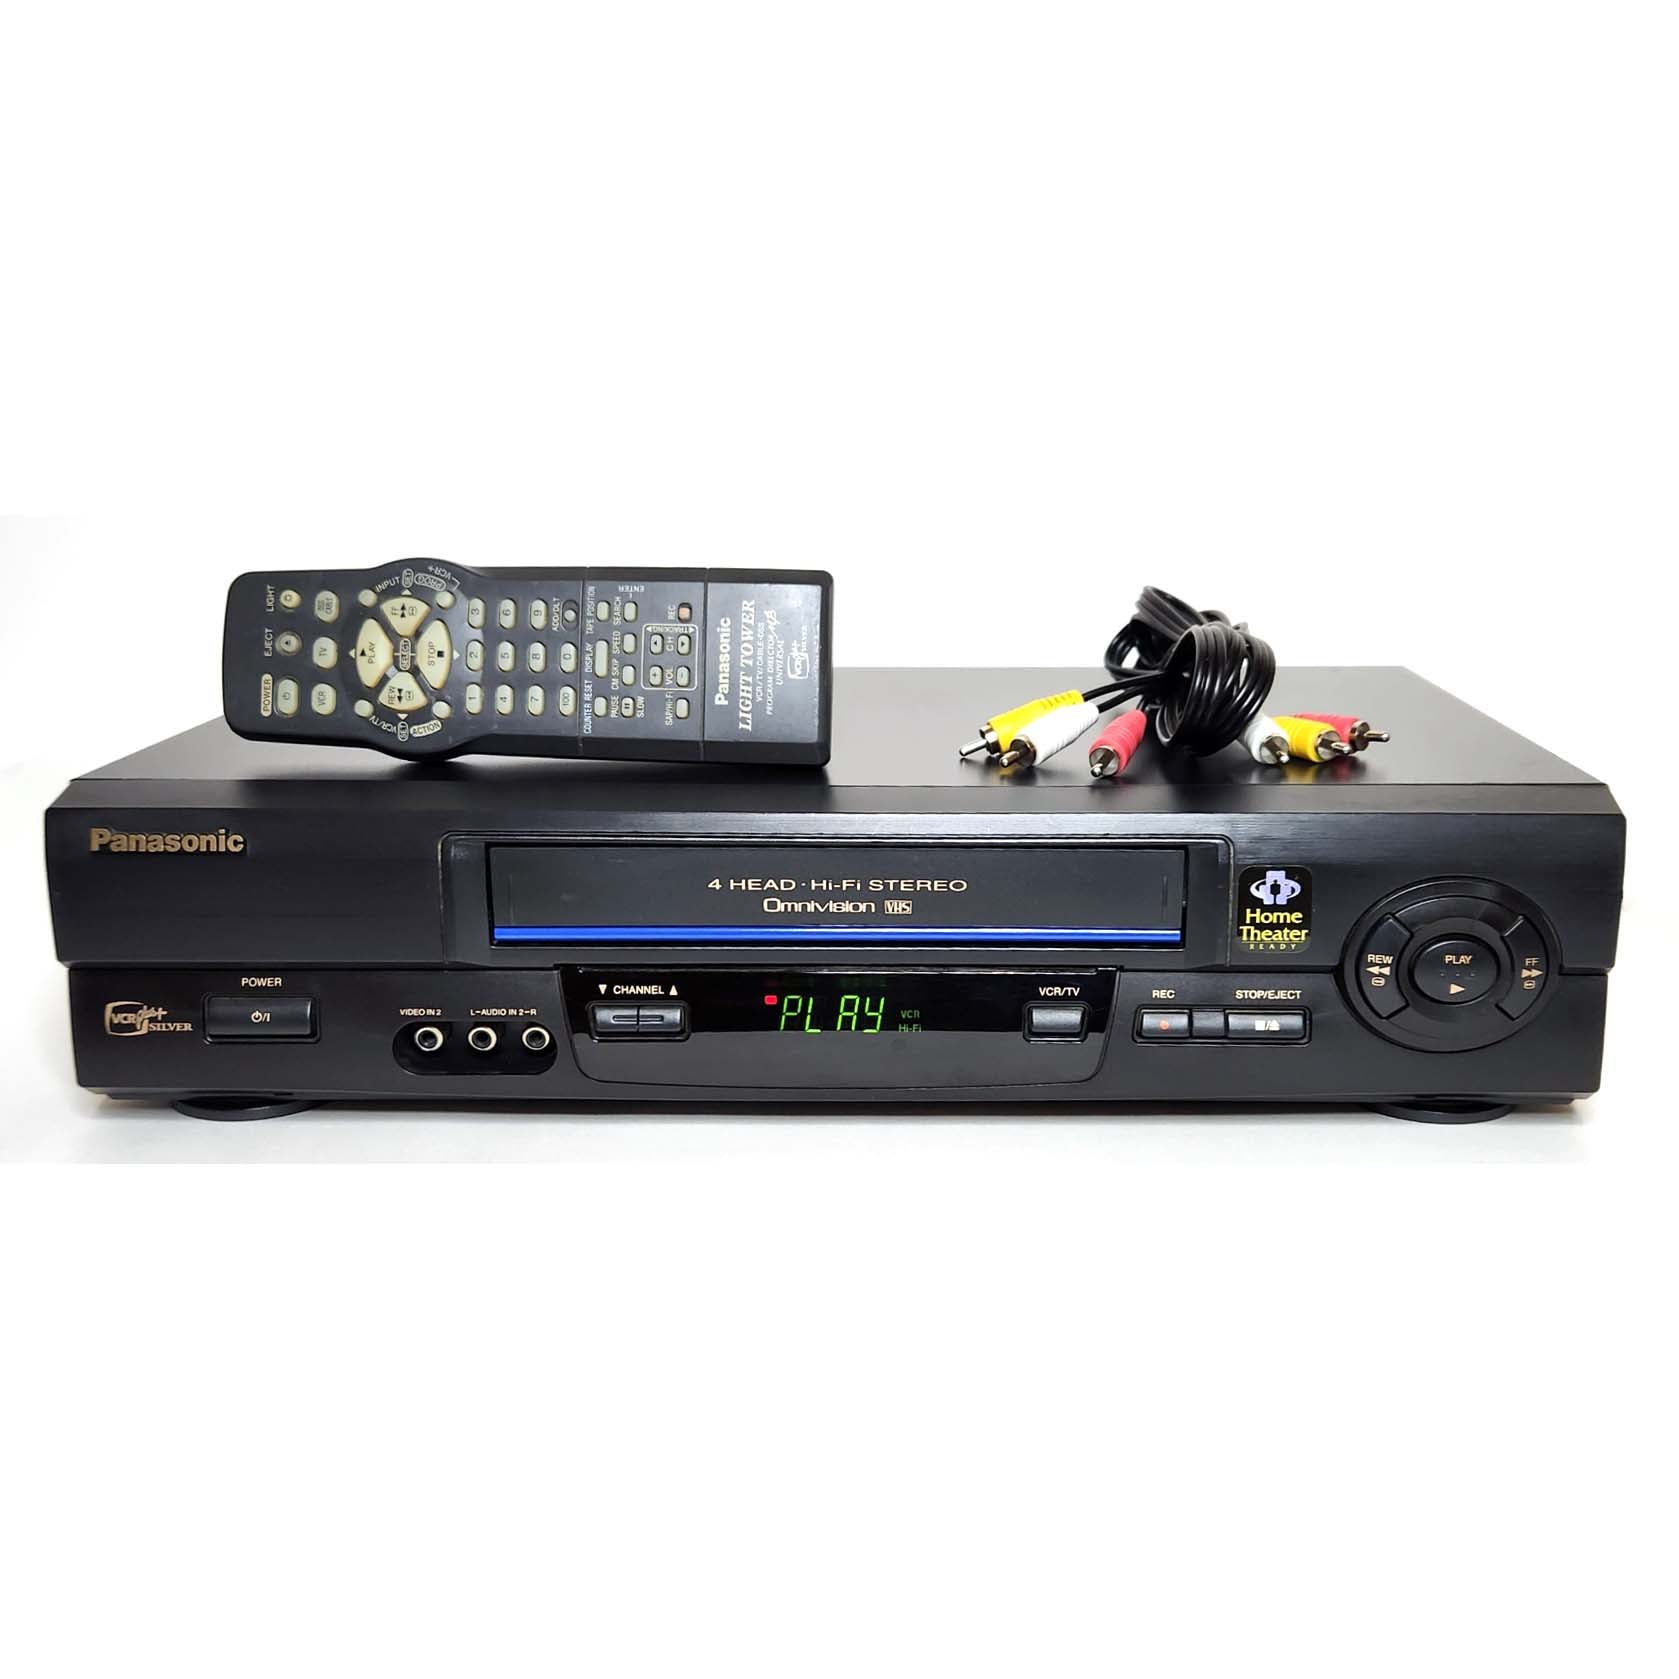 Panasonic PV-V4601 Omnivision VCR, 4-Head Hi-Fi Stereo